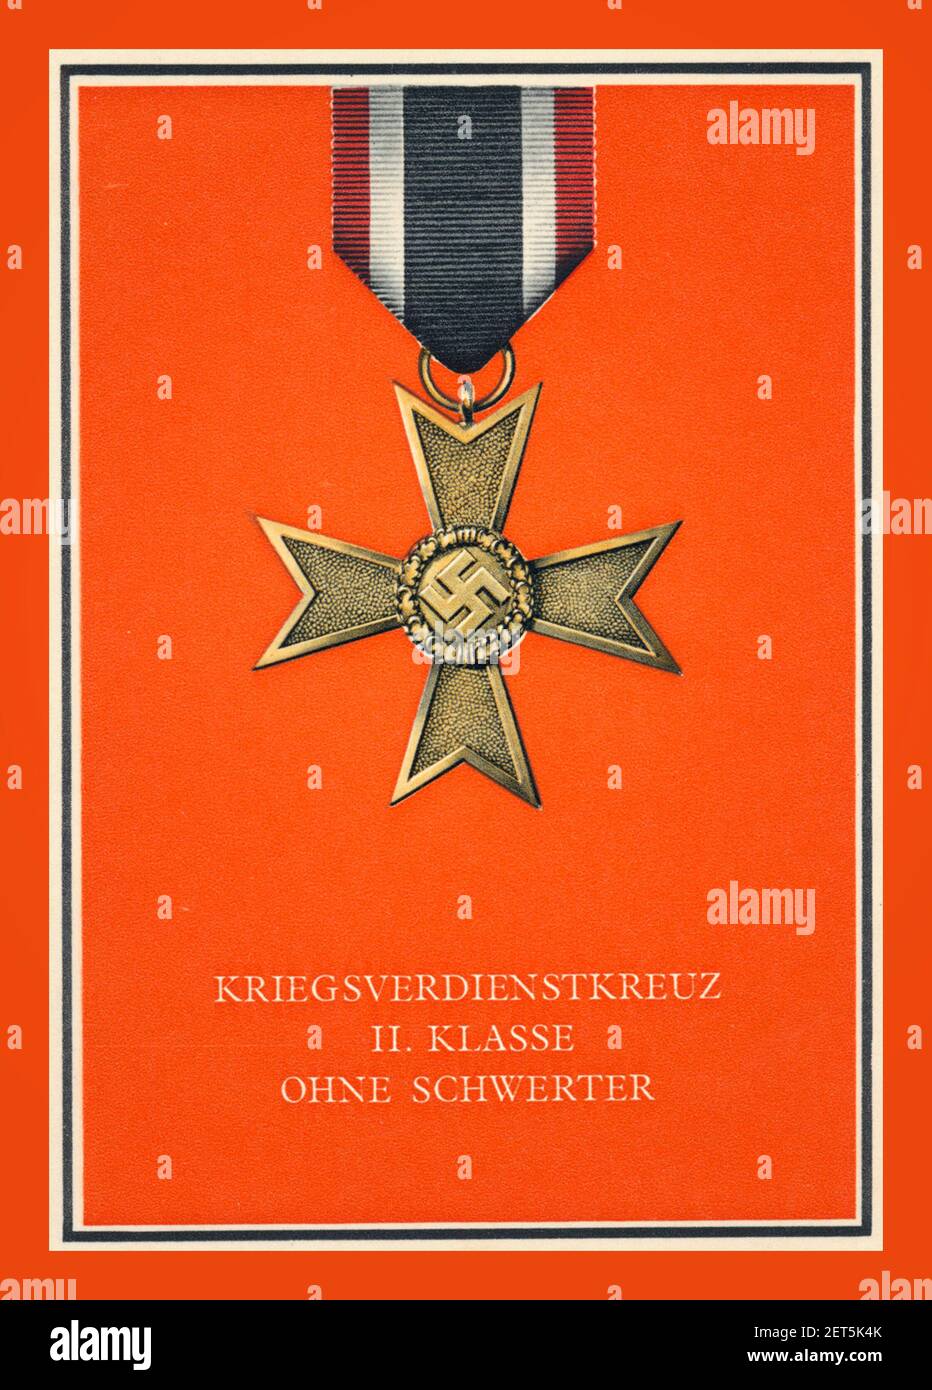 WW2 German Nazi Medal award 'kriegsverdienstkreuz 11.classe Ohne Schwerter' The Merit Cross Second Class without crossed swords. Featuring a Swastika Emblem in the centre Stock Photo